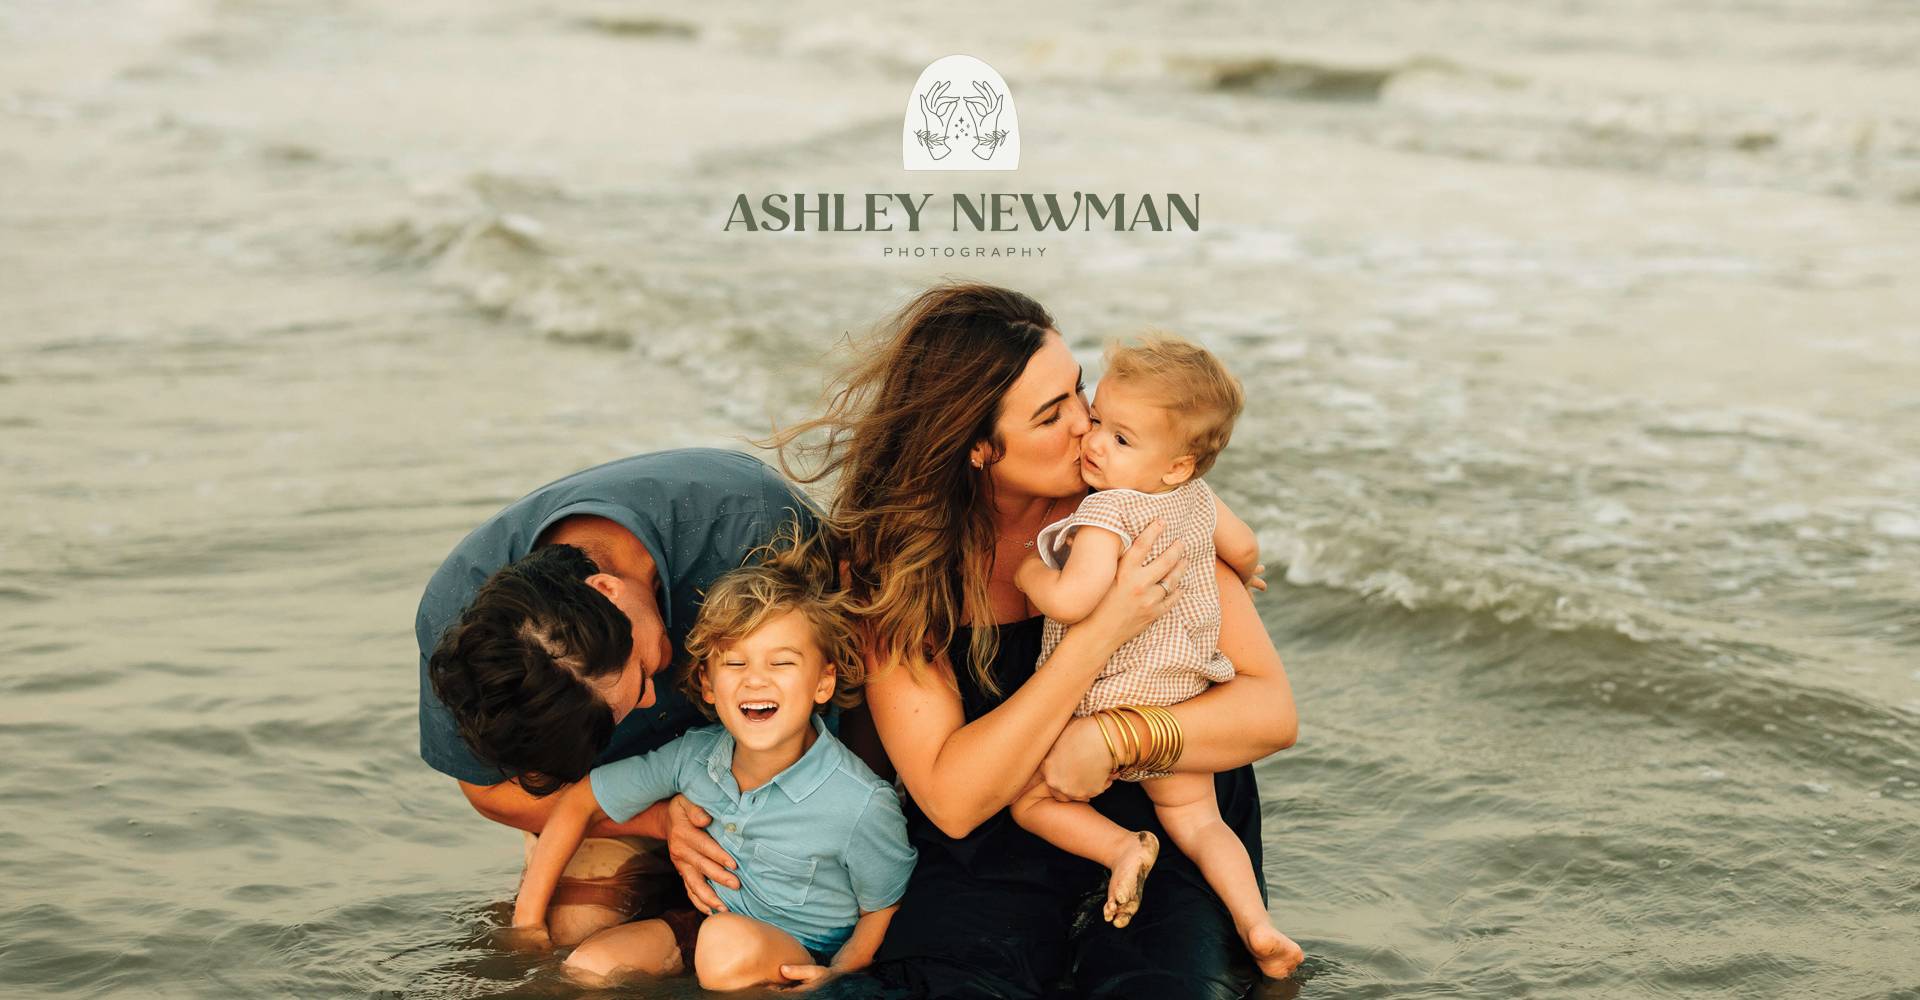 Ashley Newman Photography